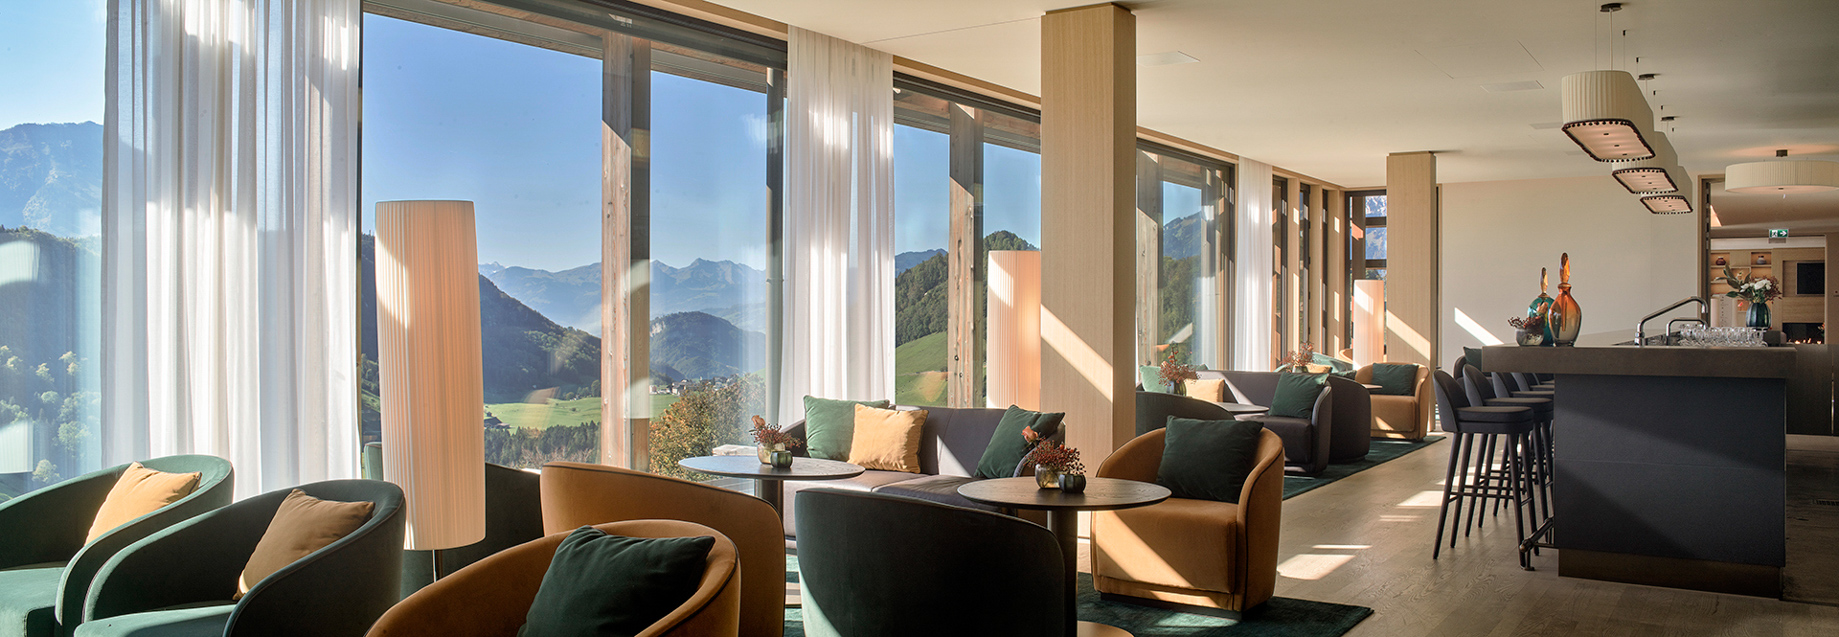 Burgenstock Hotel & Alpine Spa – Obburgen, Switzerland – Verbena Restaurant & Bar Interior